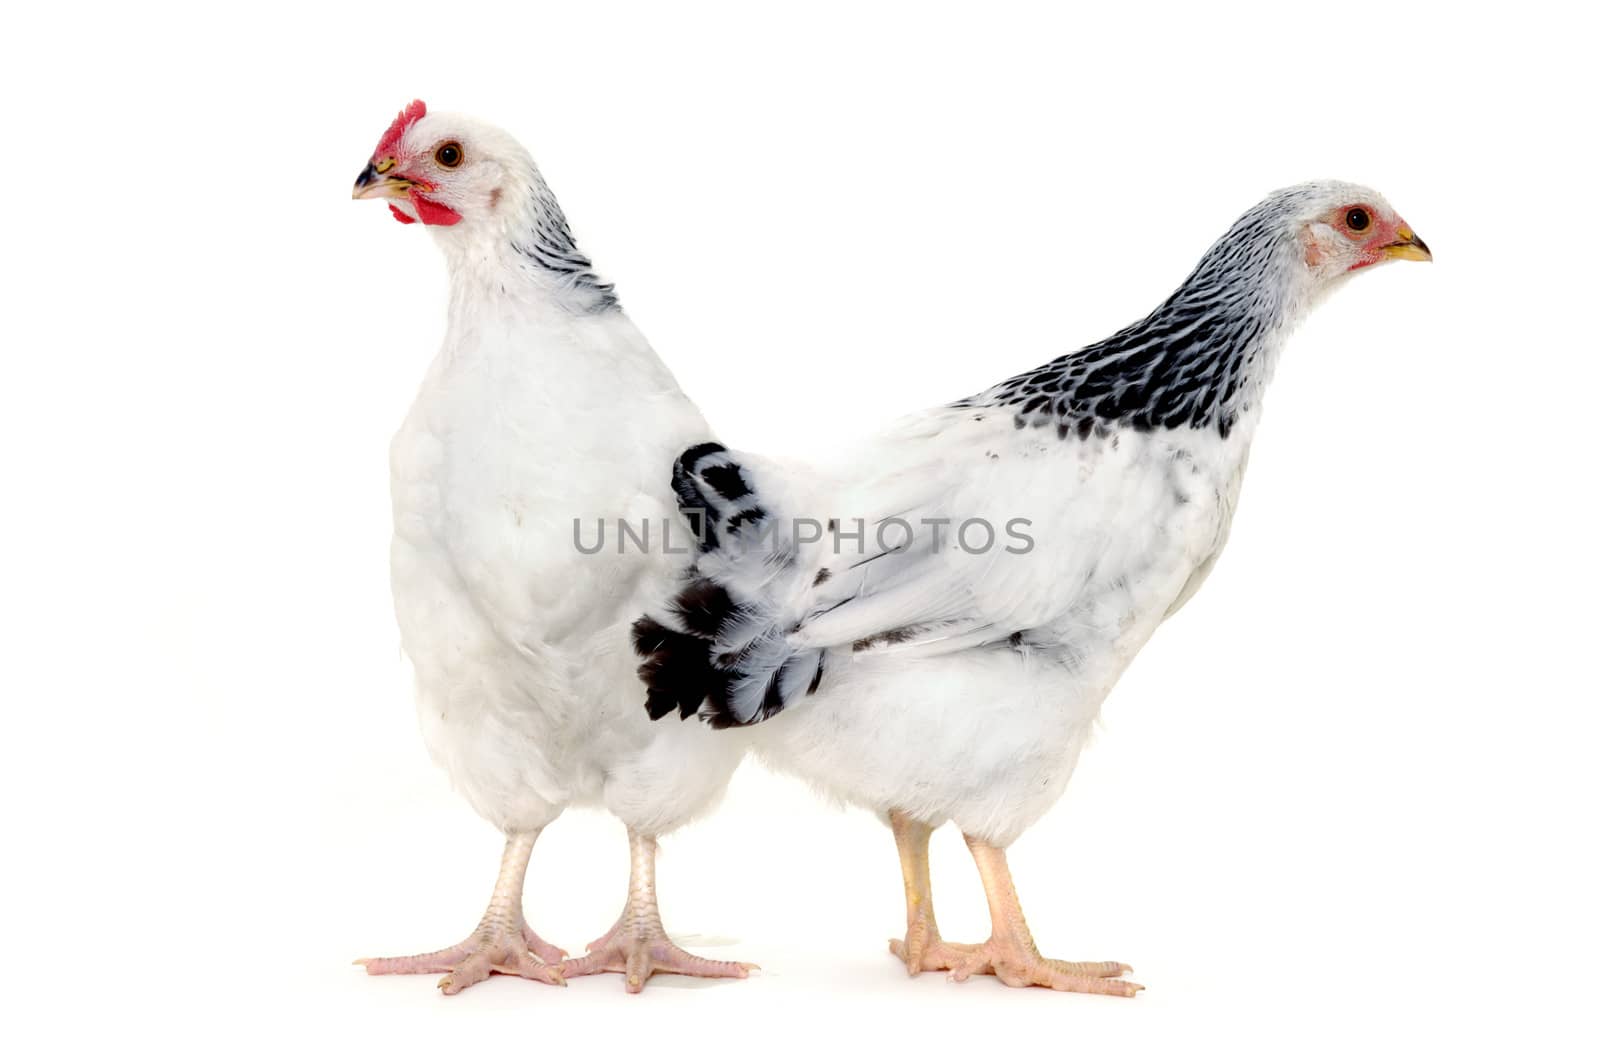 Chickens by cfoto